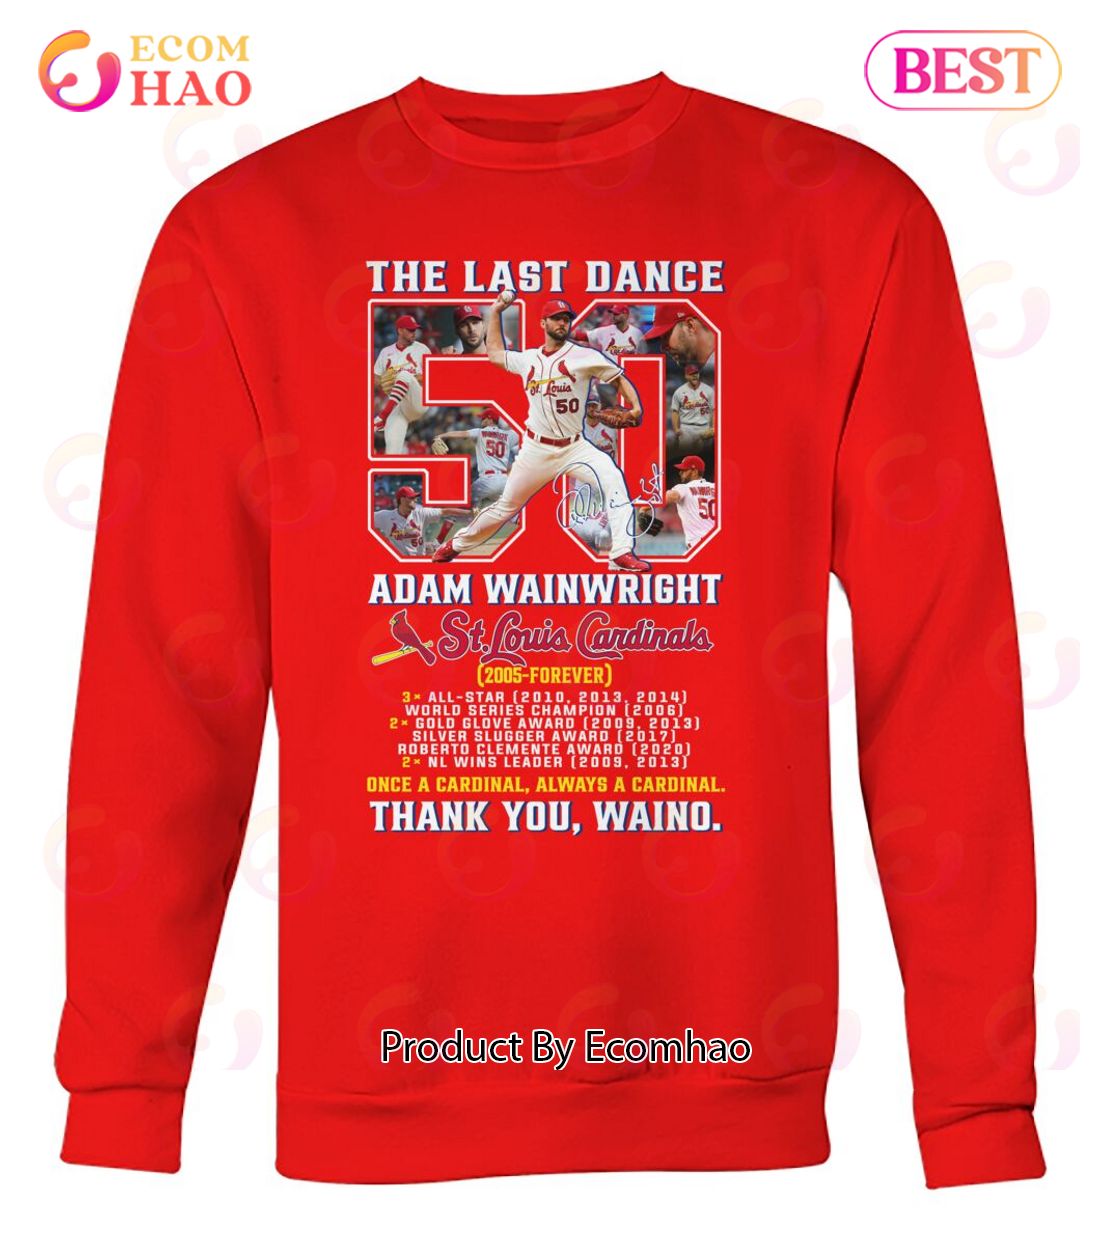 The Last Dance Adam Wainwright St. Louis Cardinals 2005 – Forever